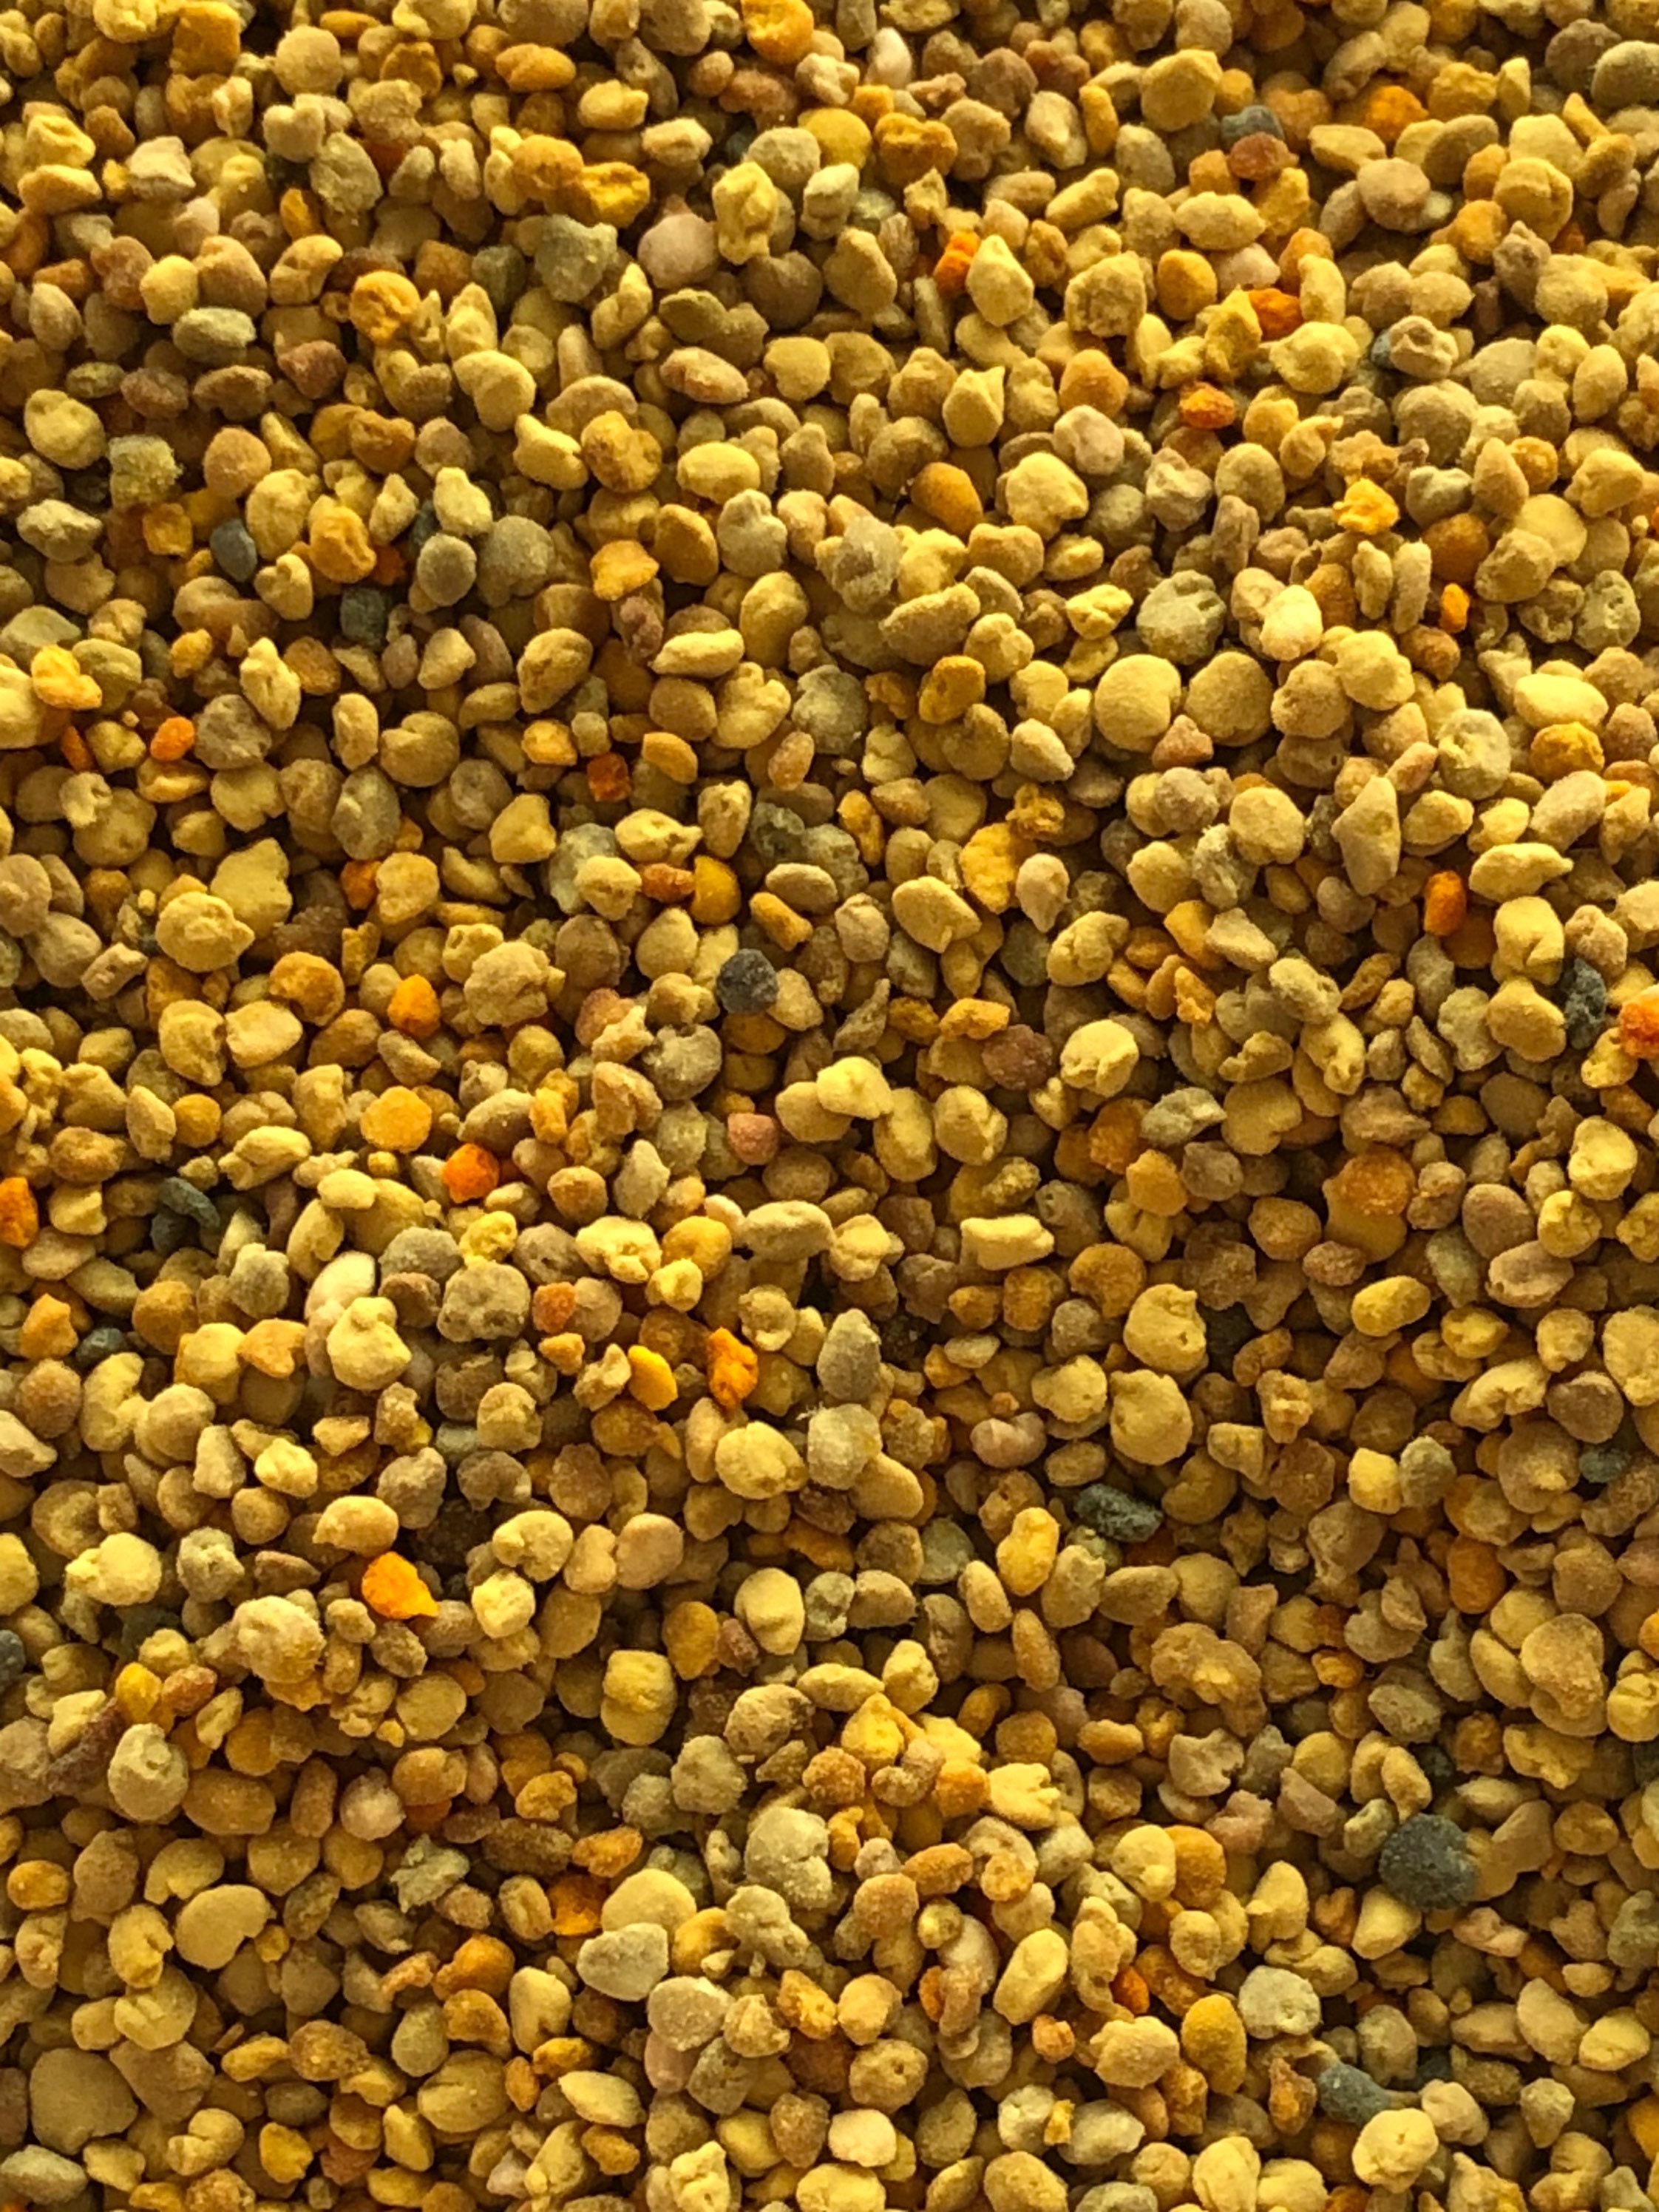 Bee Pollen - 1.25 oz - Badia Spices